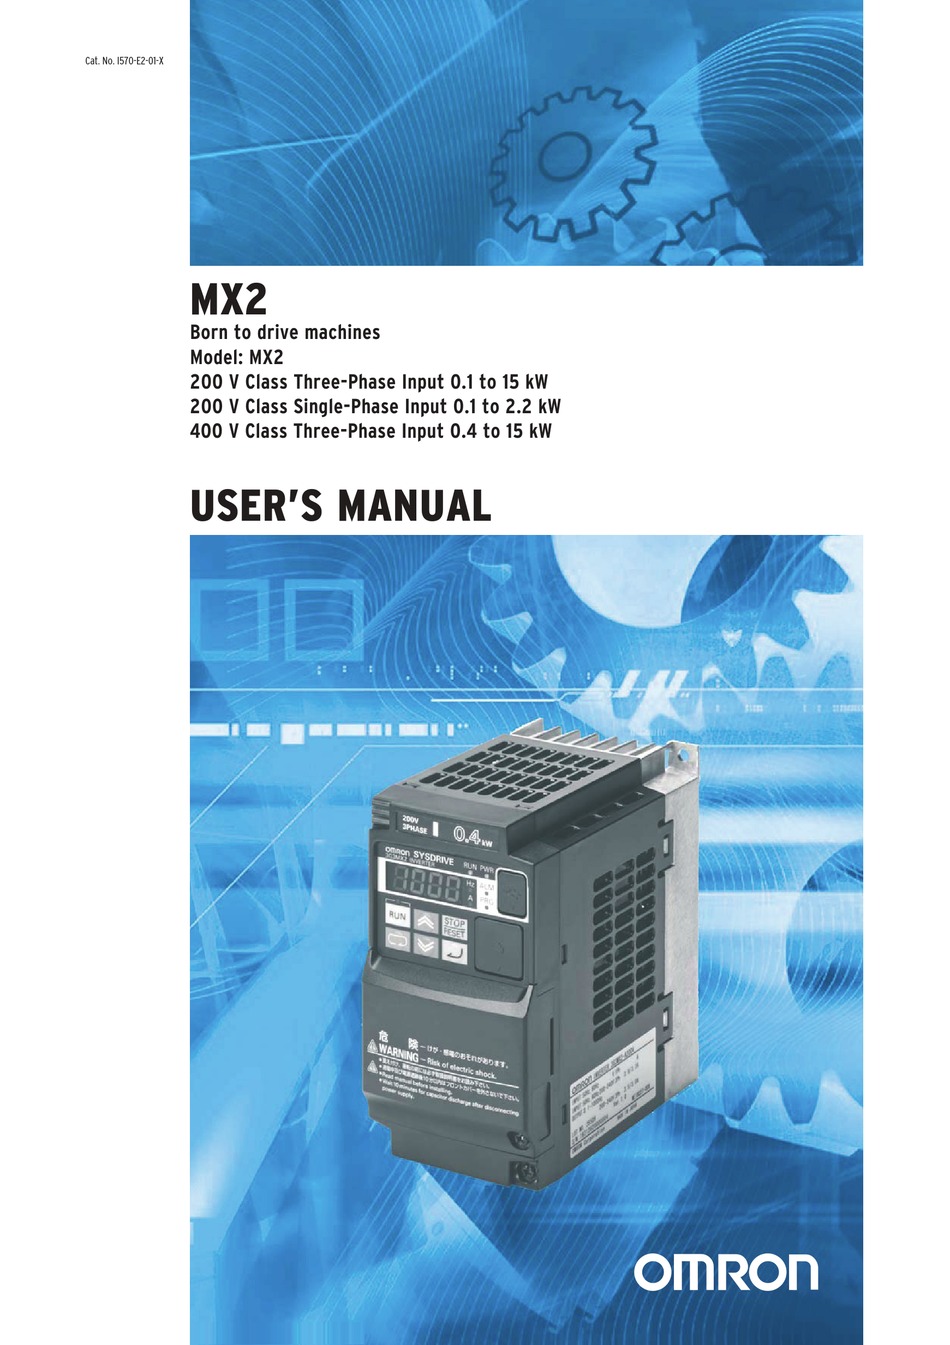 OMRON MX2 USER MANUAL Pdf Download | ManualsLib